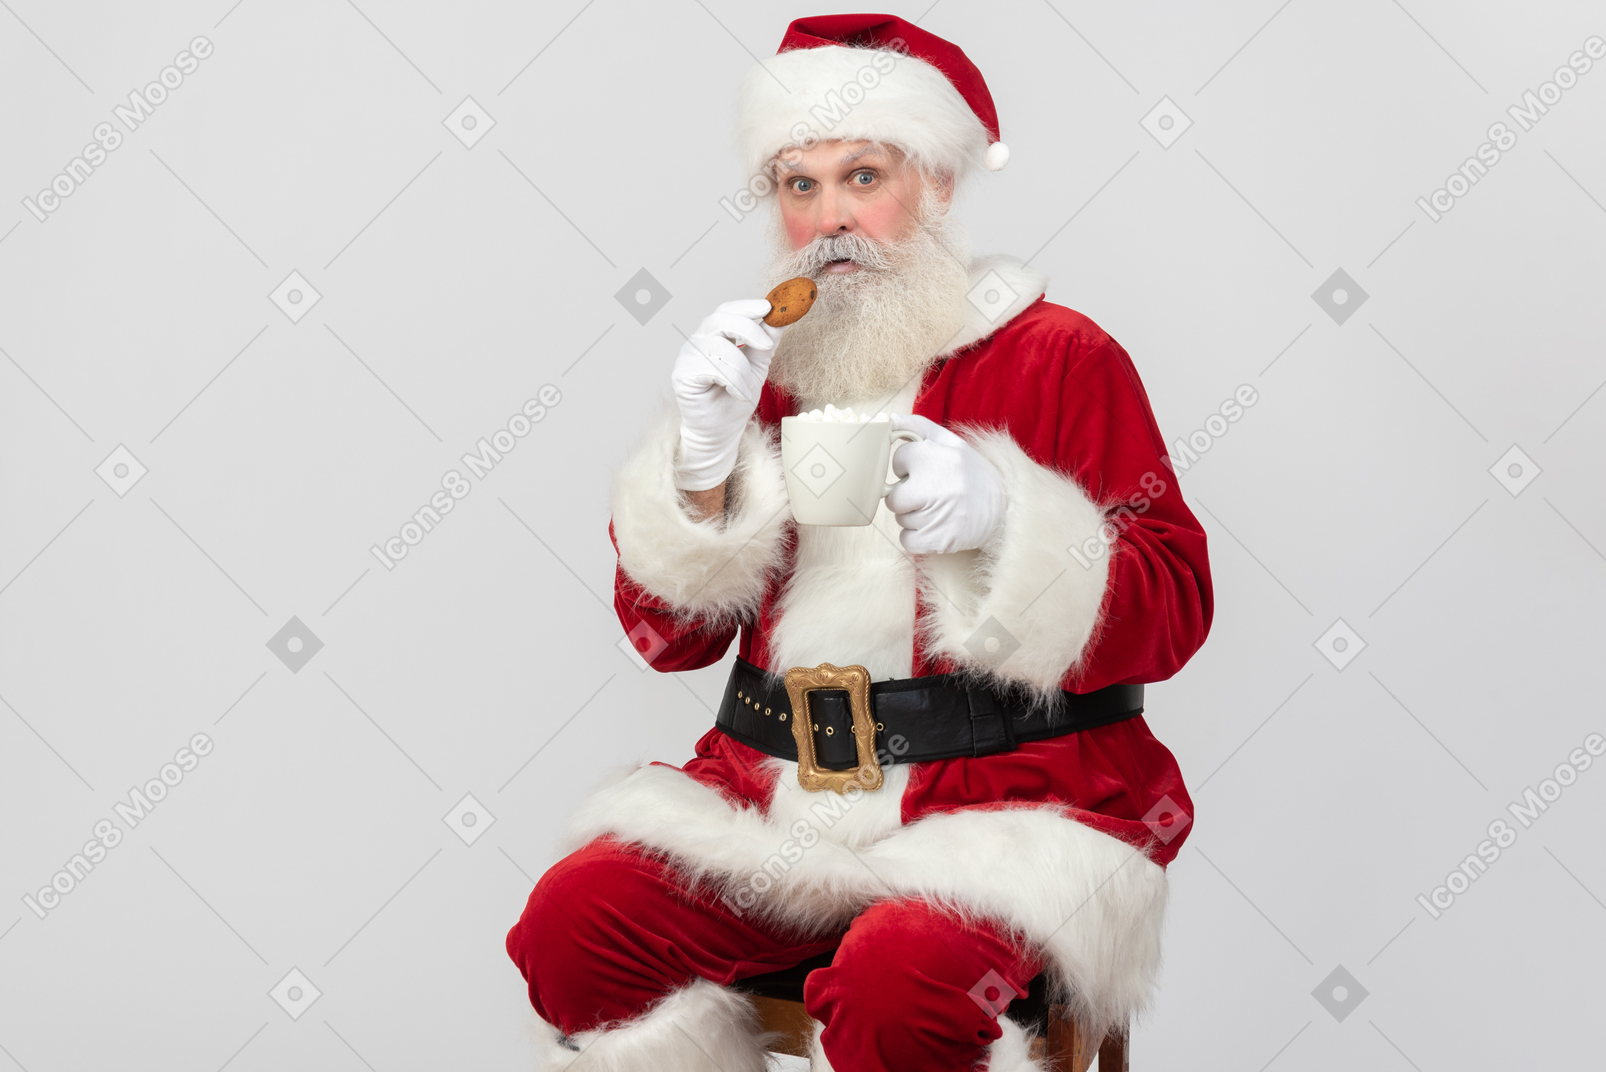 Santa claus eating cookie and having cookie